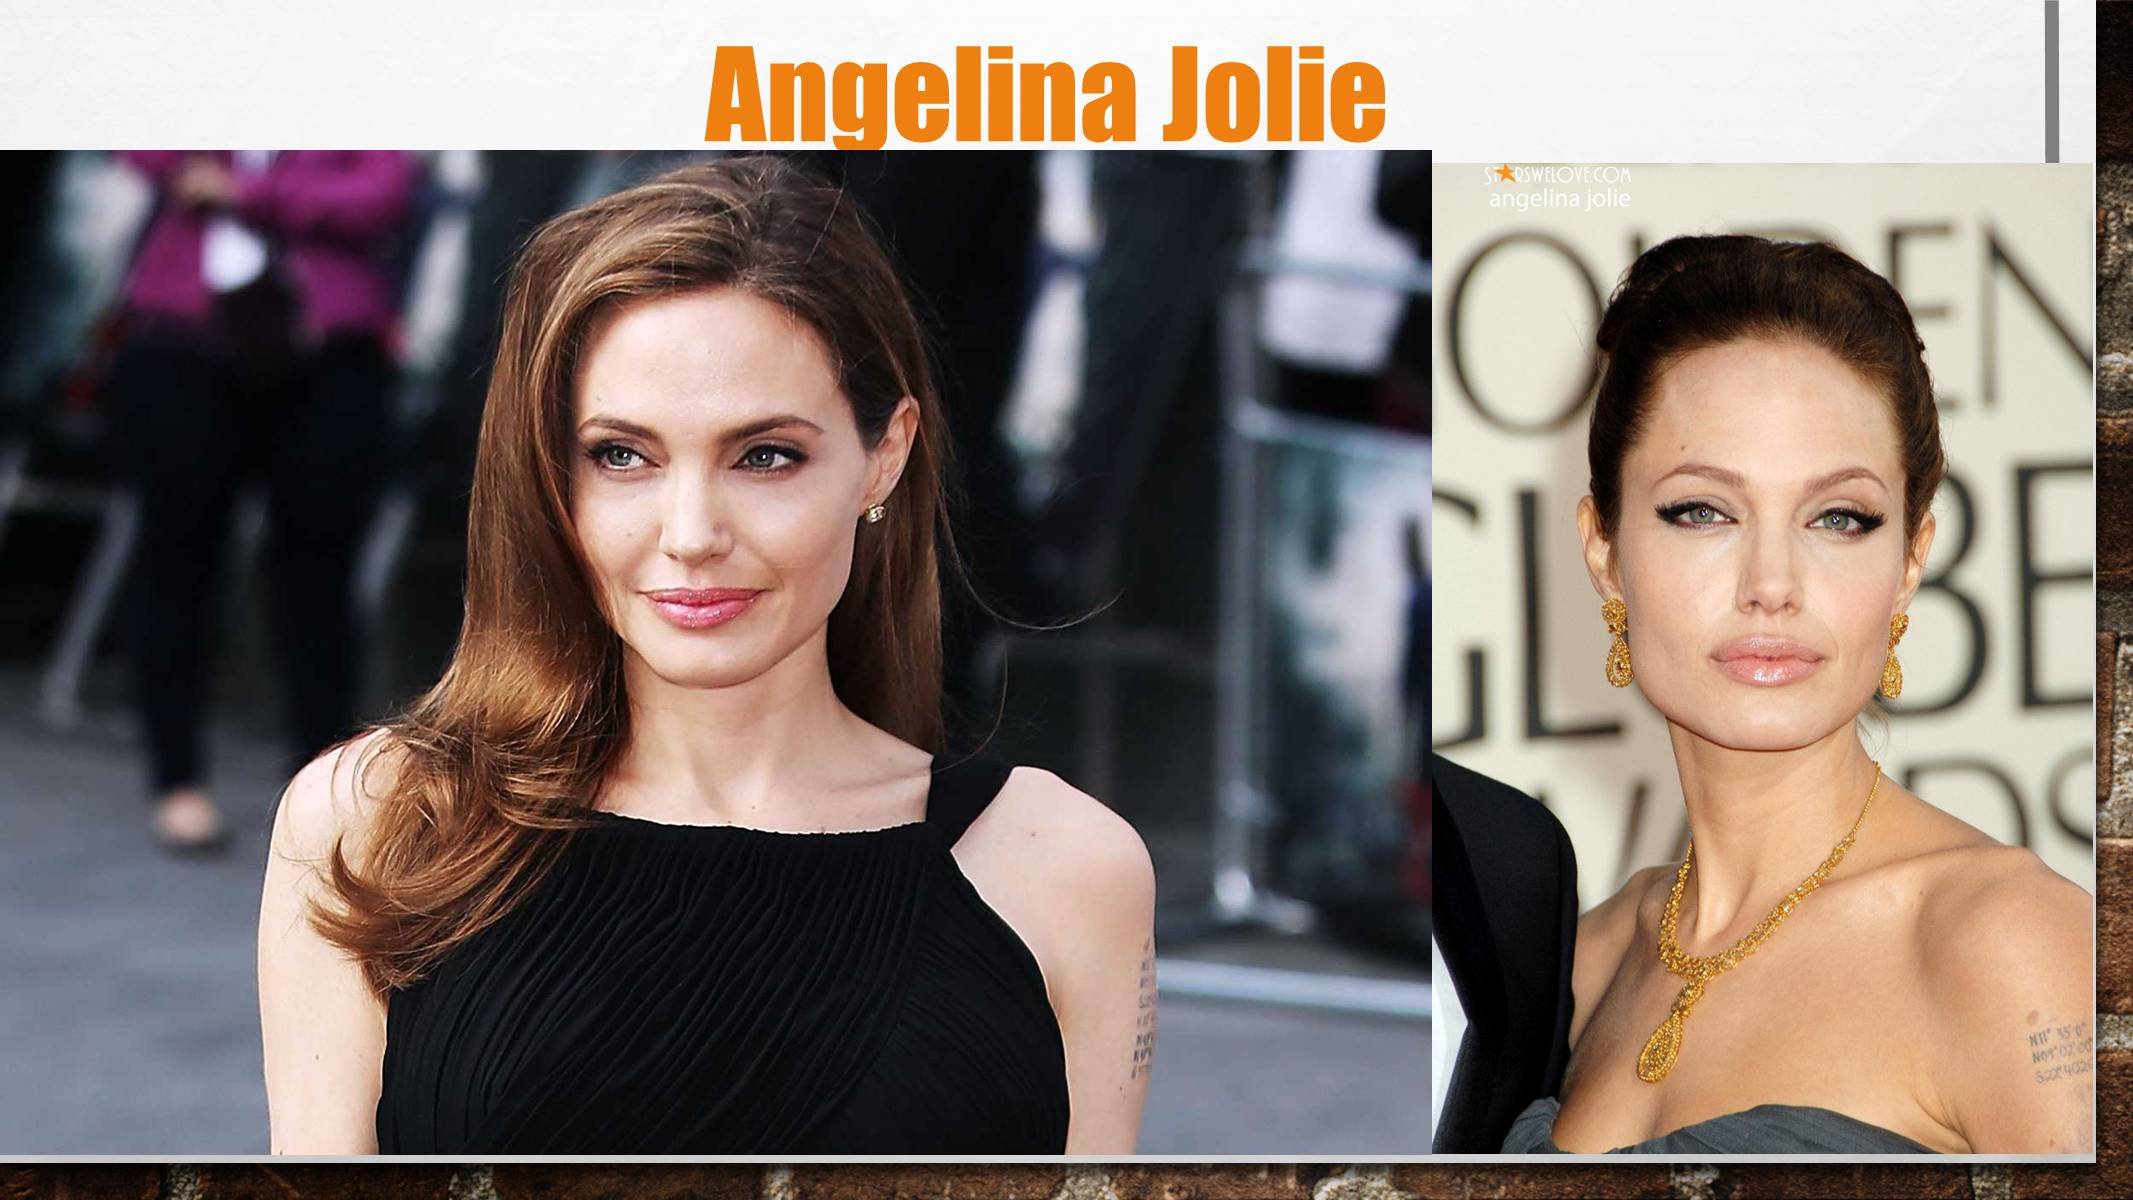 Анджелина джоли до пластики. Анджелина Джоли до пластической операции. Брови Анджелины Джоли. Анджелина Джоли брови до и после.